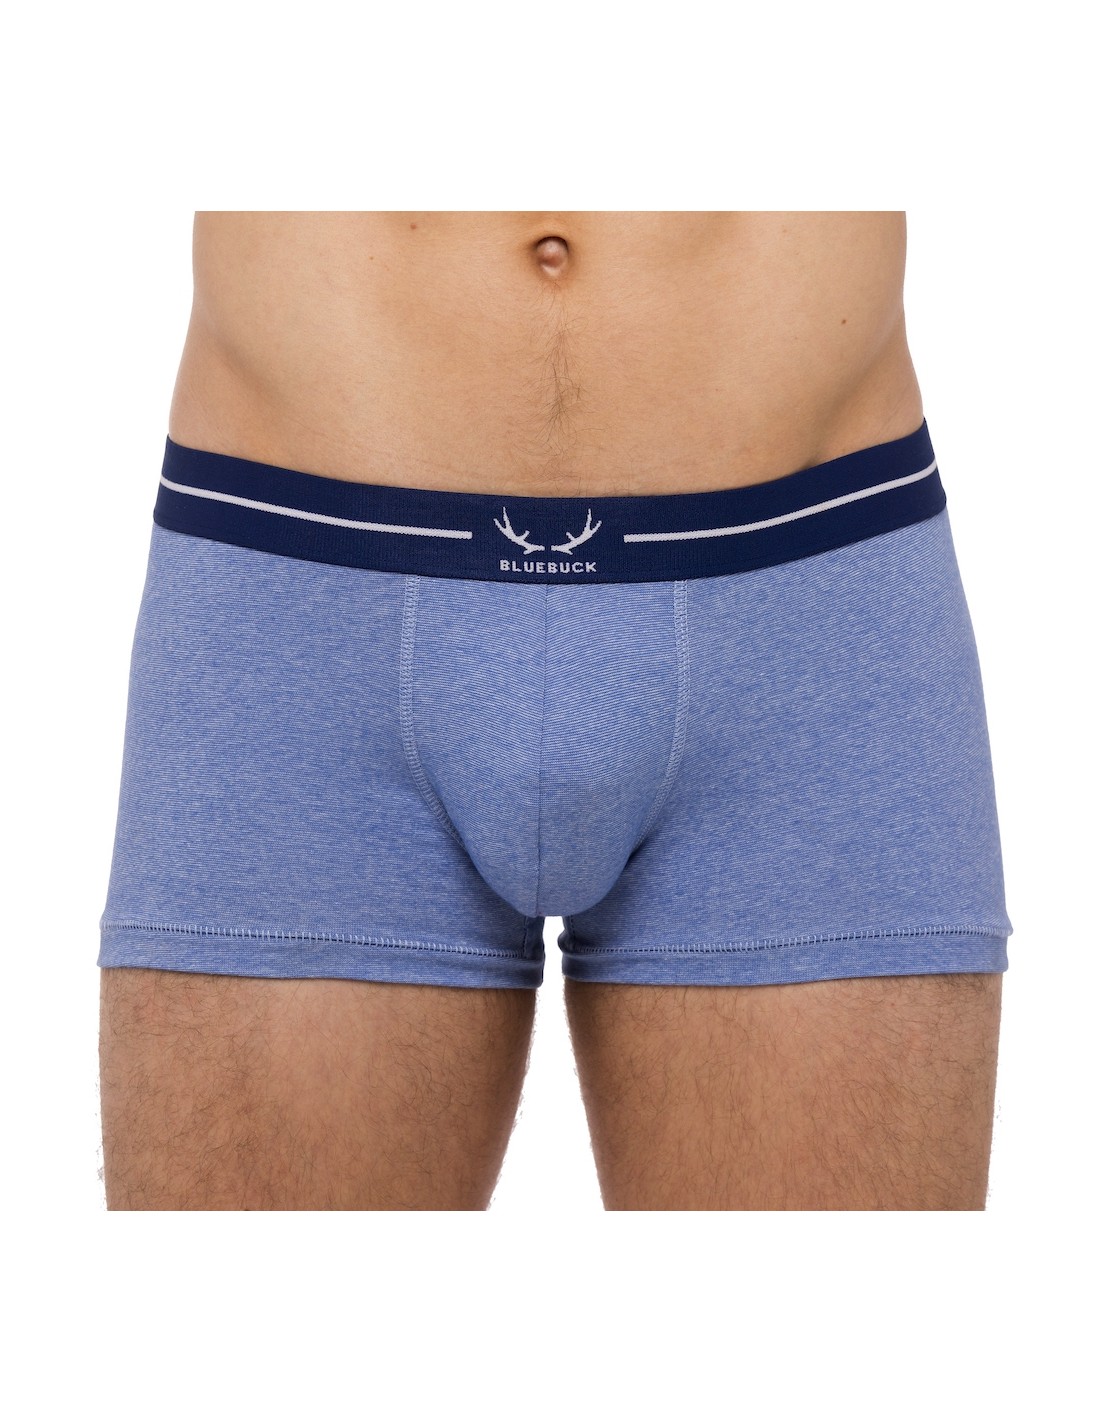 Bluebuck underwear - Blue Yonder Trunks